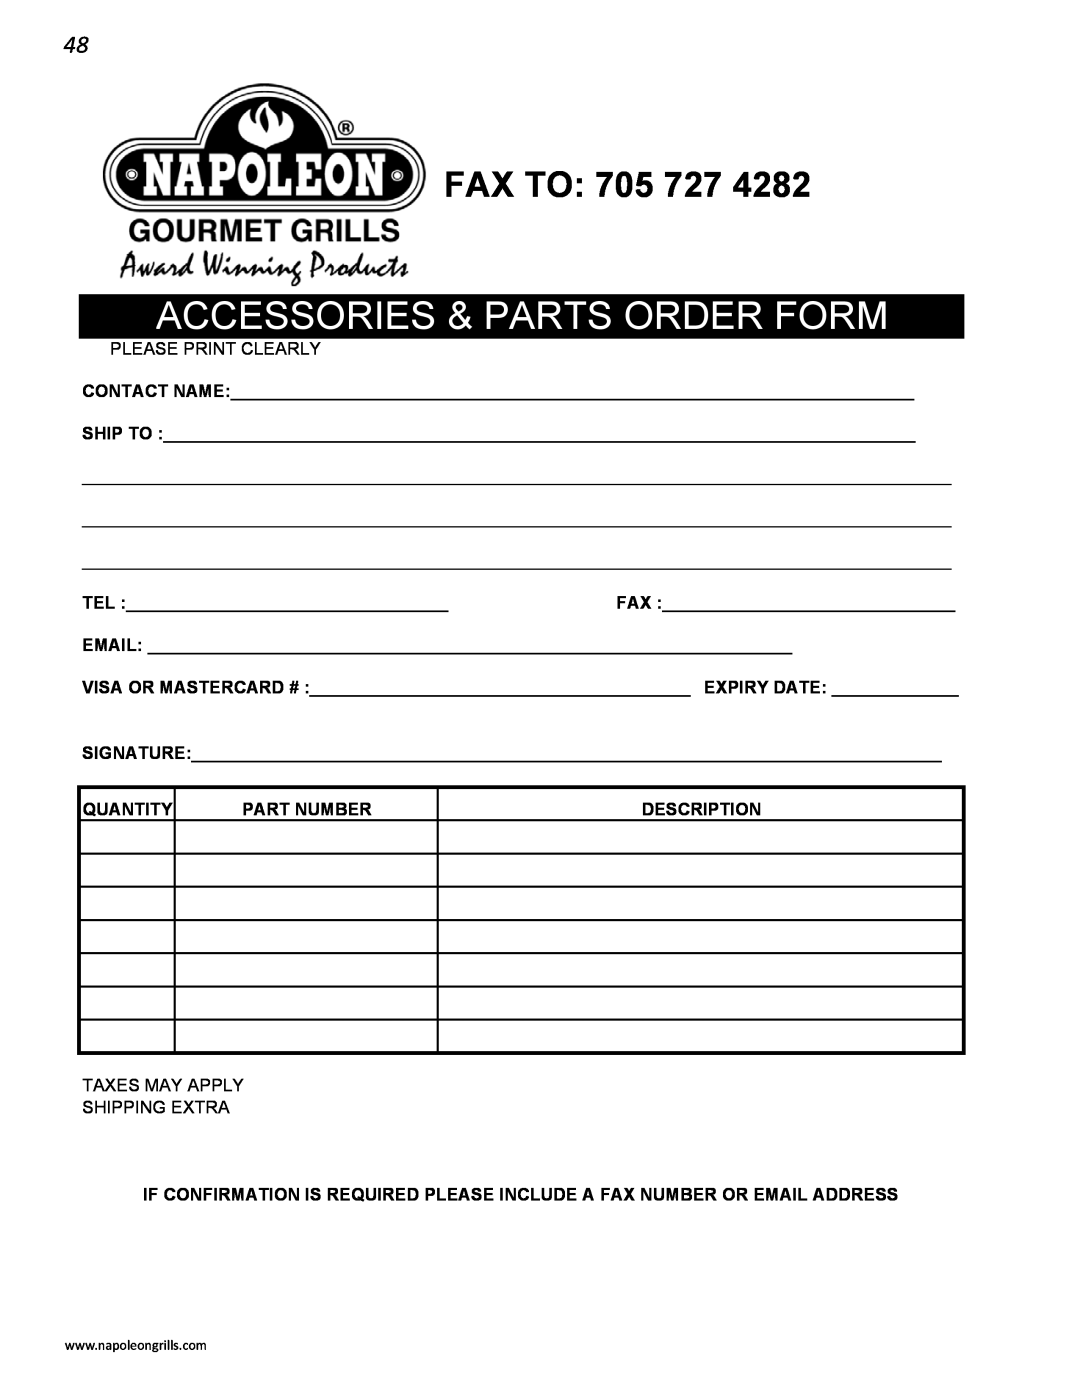 Napoleon Grills V 600, V 450 manual Accessories & Parts Order Form, Fax To 